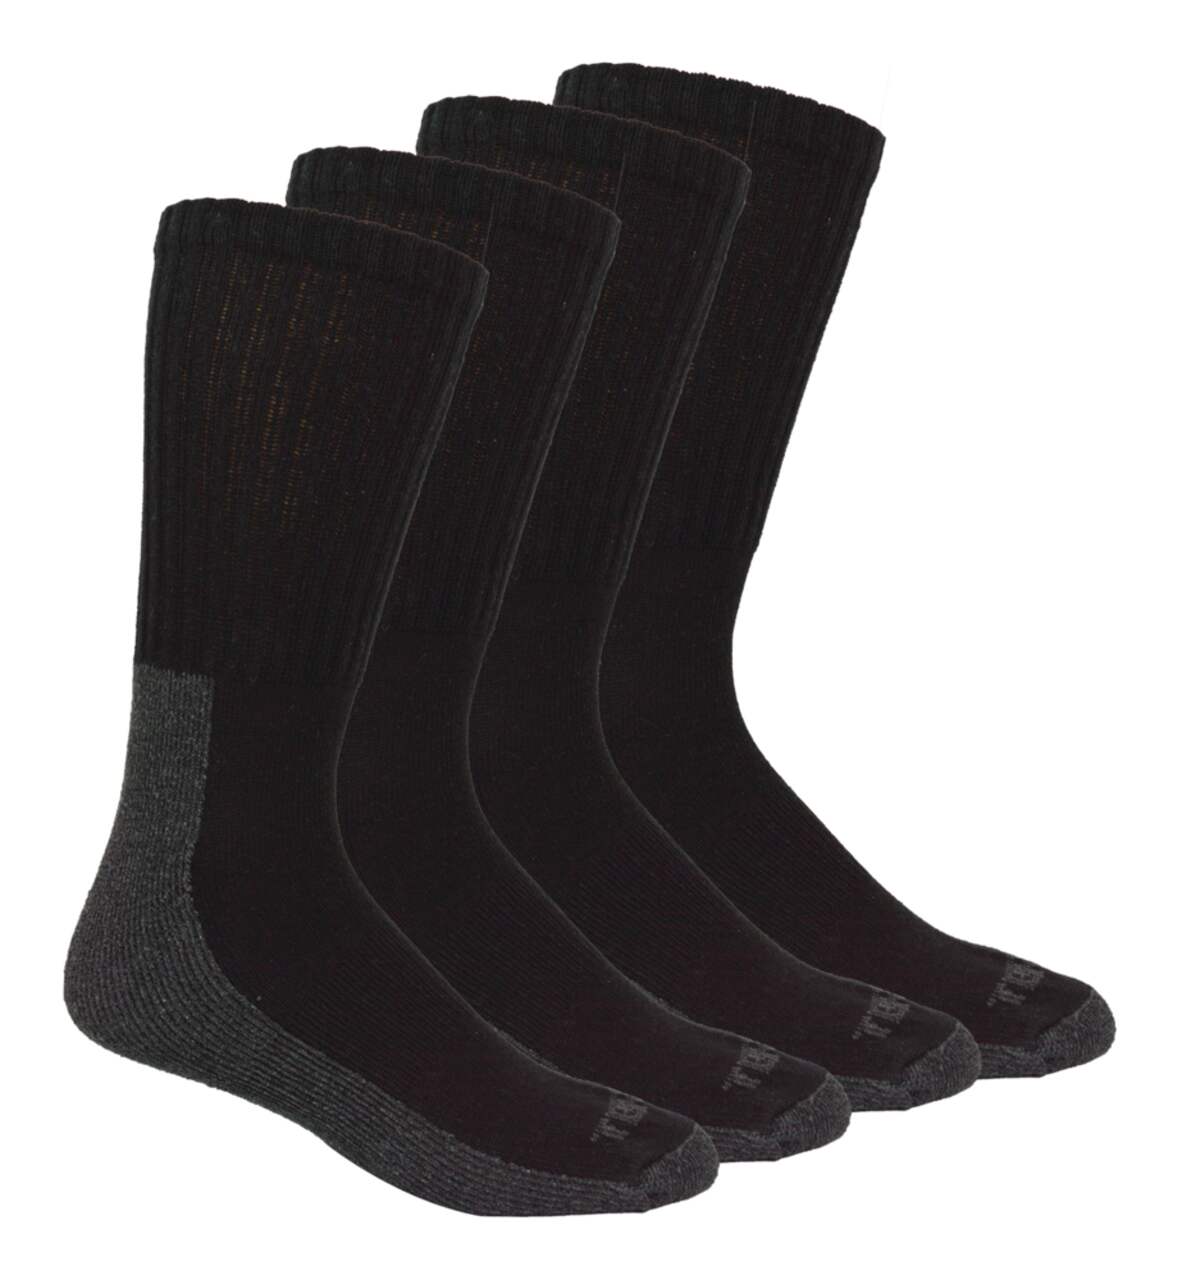 Terra Men's Steel Toe Breathable Work Socks, Fully Cushioned for